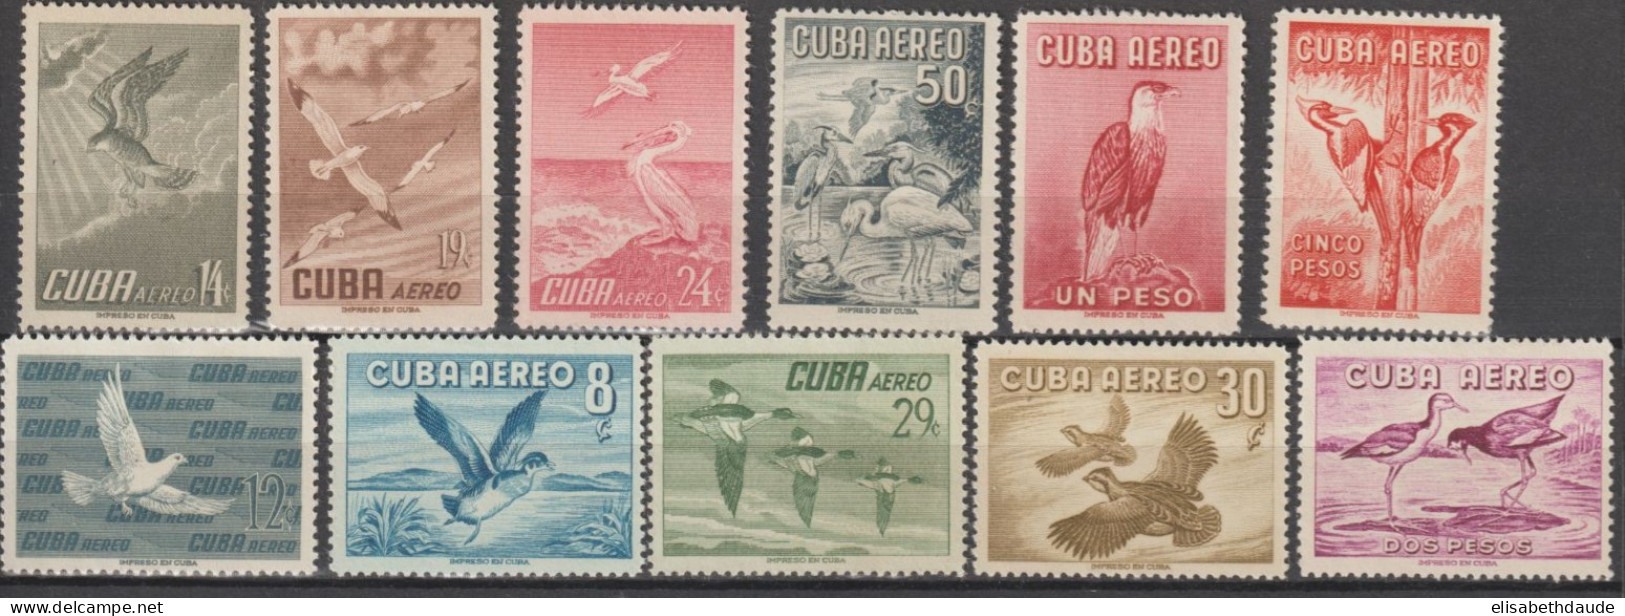 C UBA - 1957 - POSTE AERIENNE - SERIE COMPLETE OISEAUX / BIRDS YVERT N°135/145 ** / * MNH / MLH - COTE YVERT = 90 EUR - Luftpost